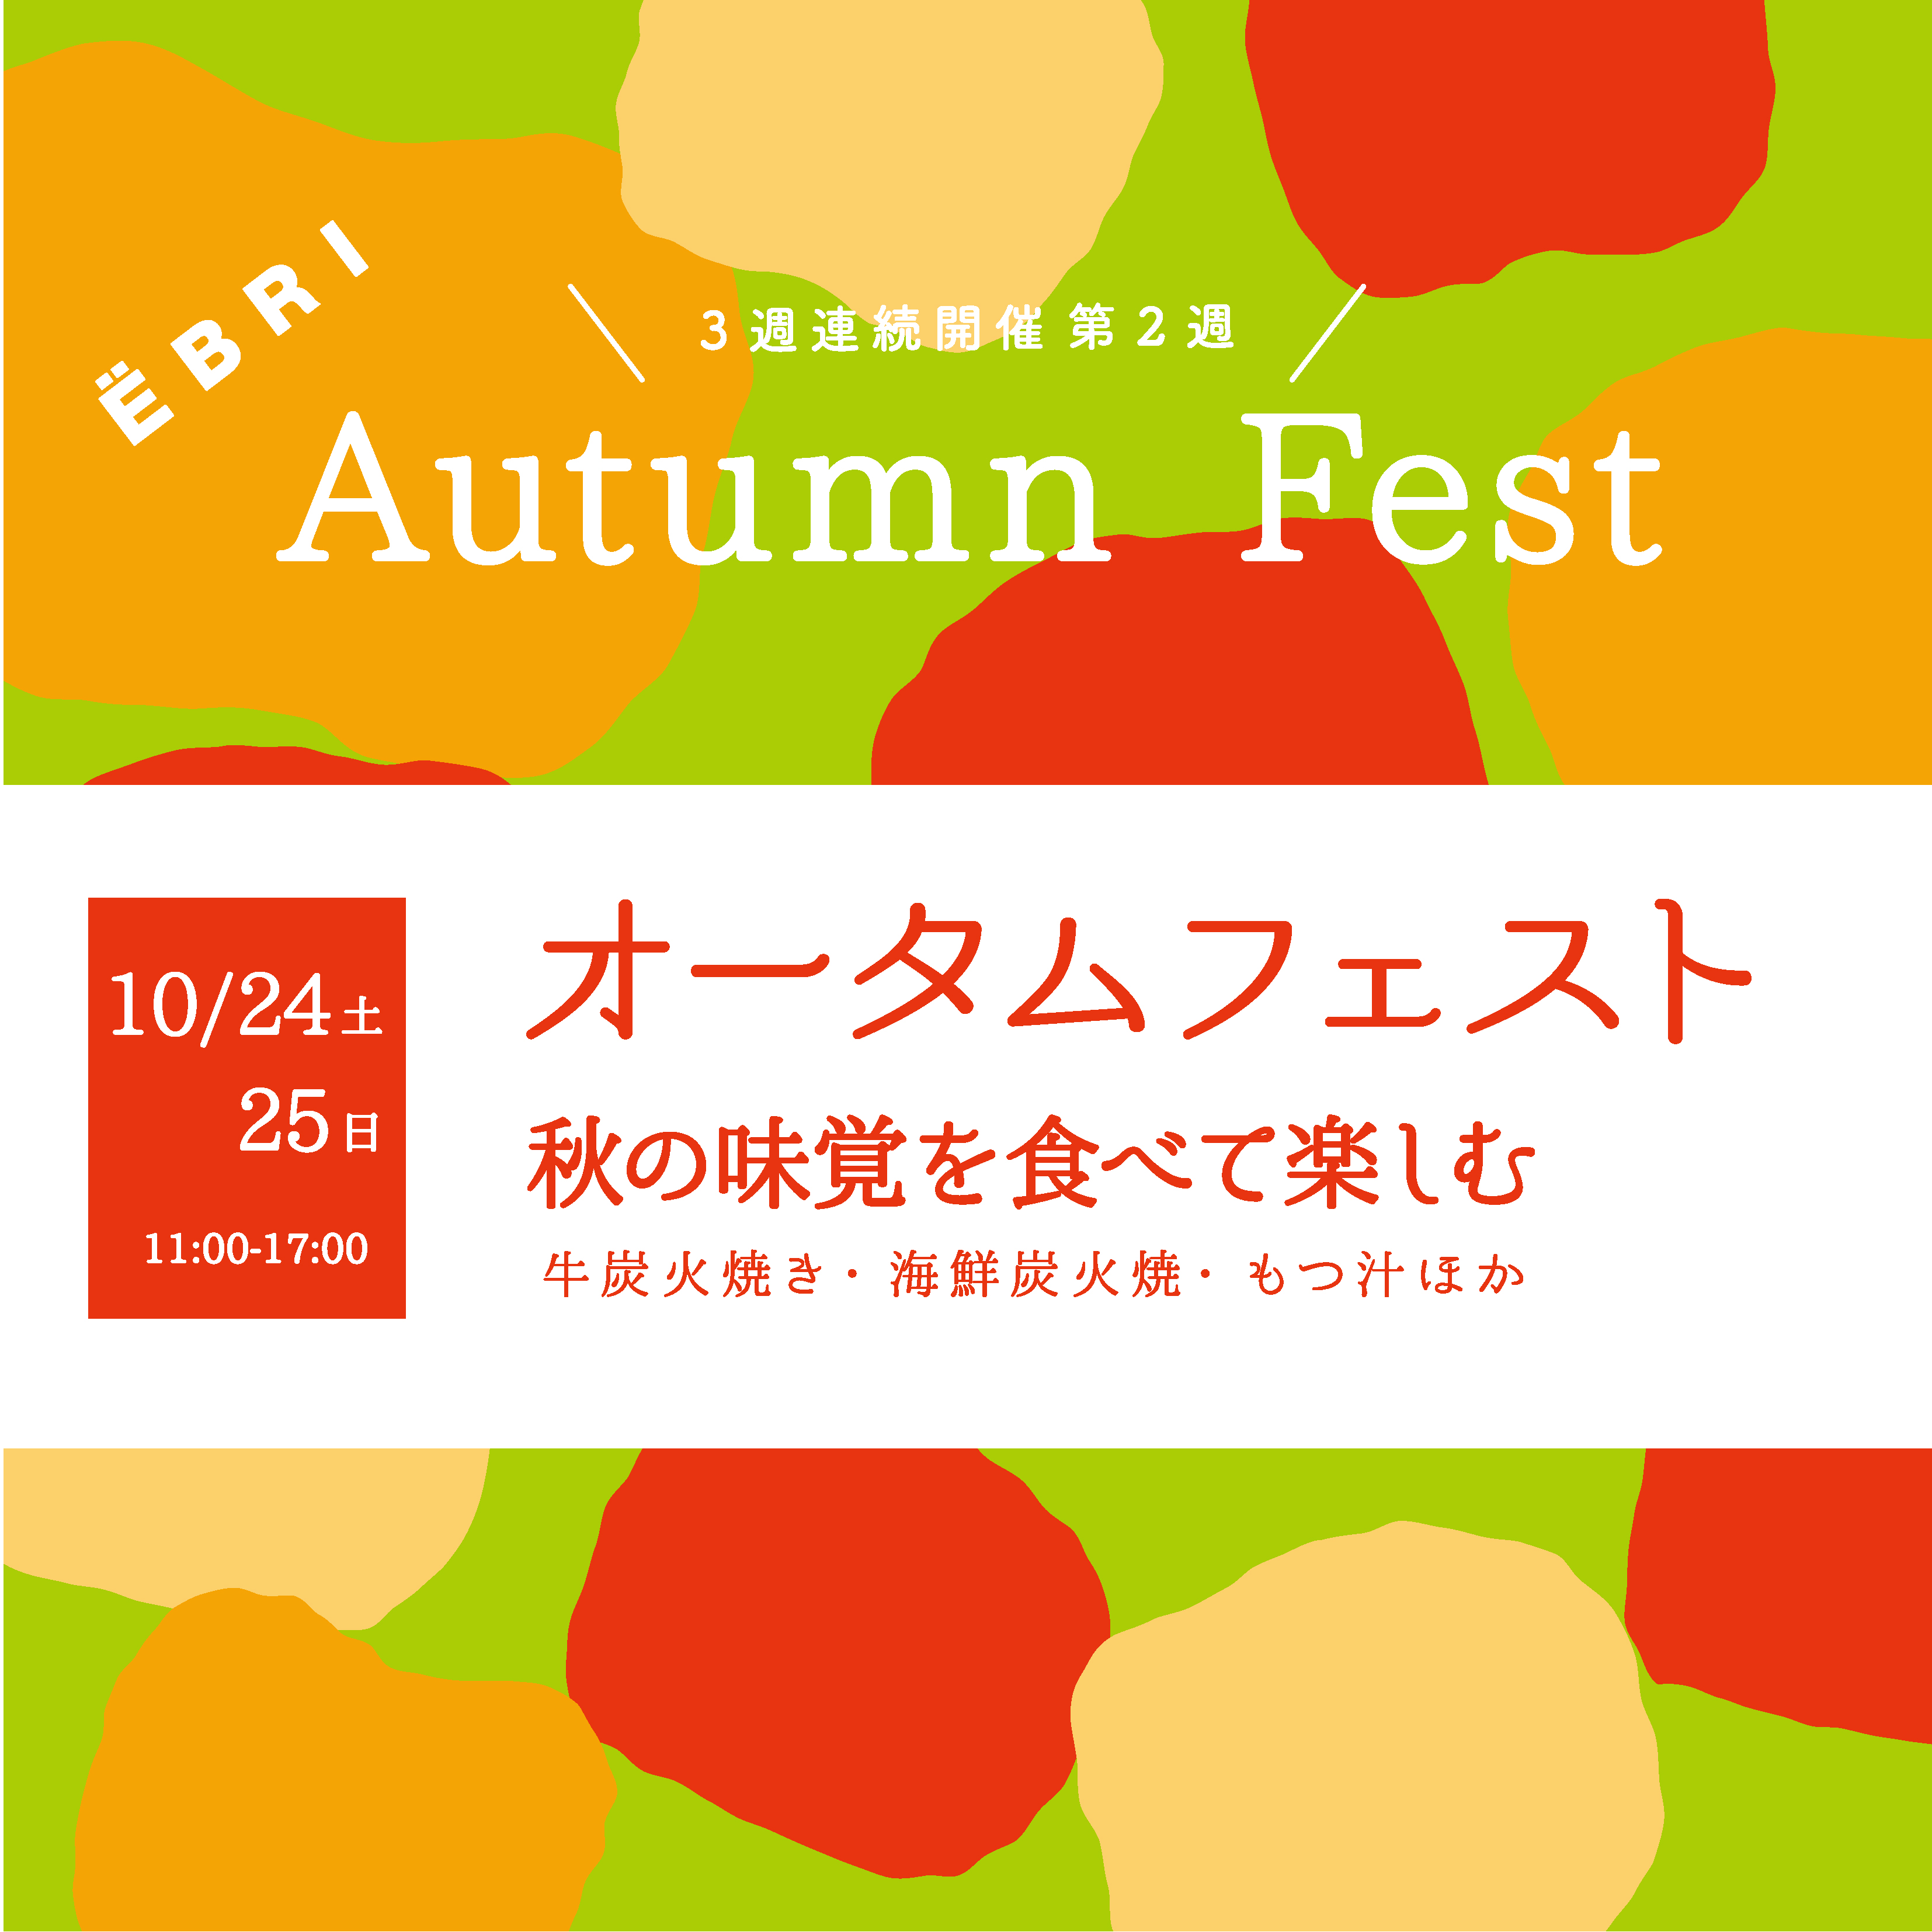 EBRI Autumn Fest オータムフェスト【延期のお知らせ】